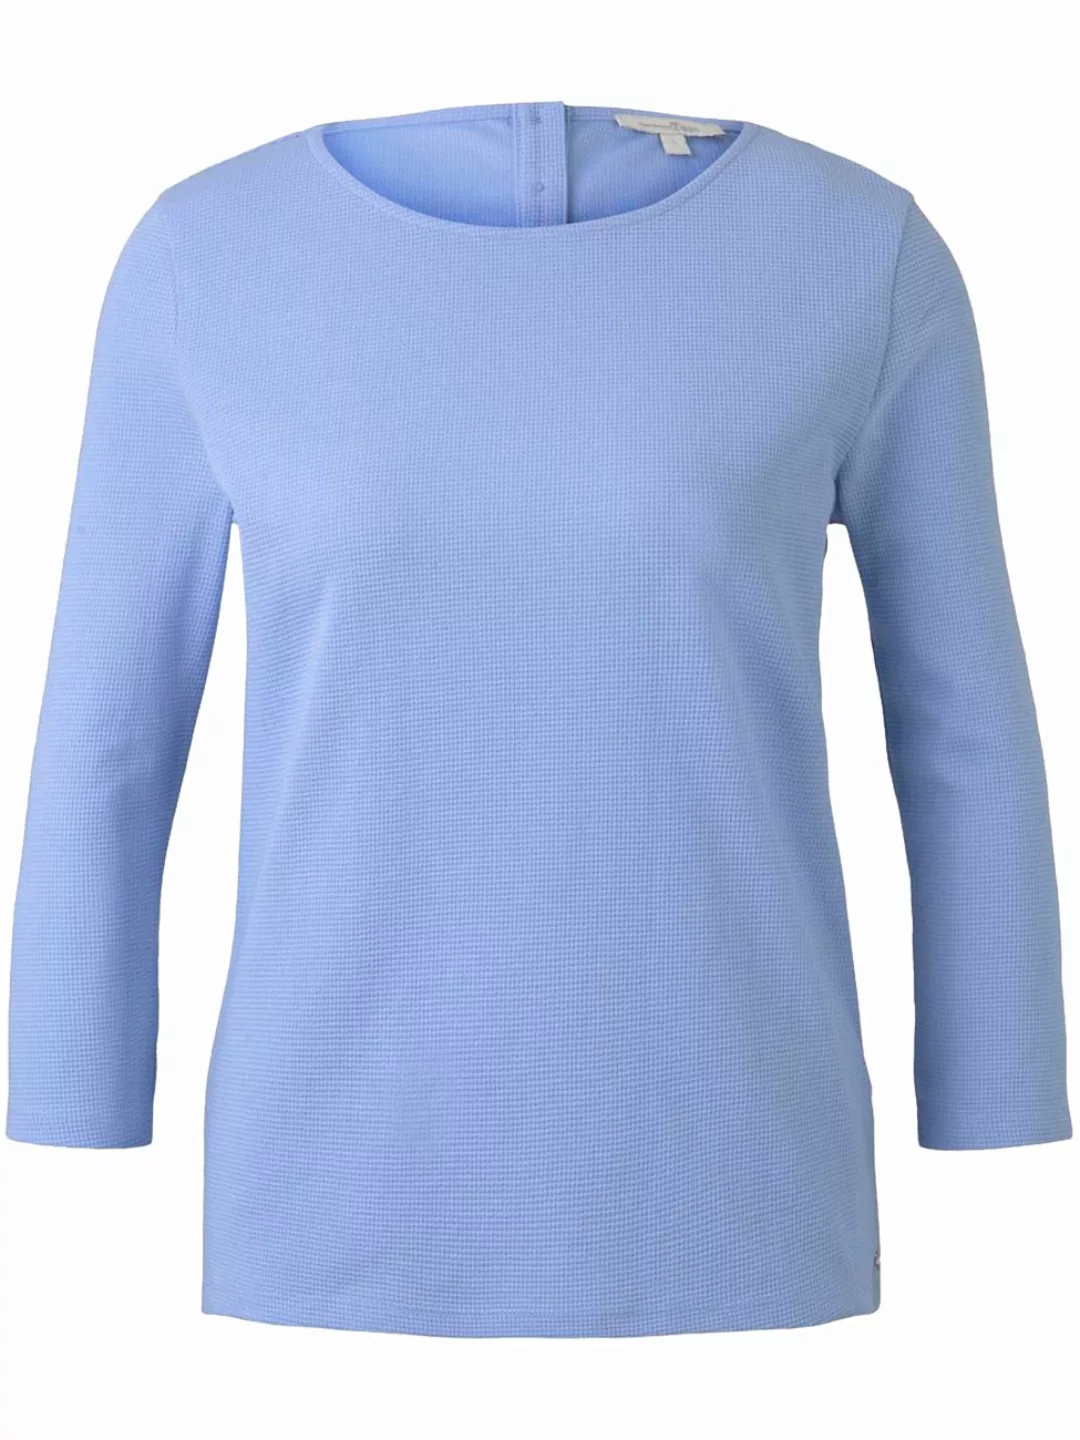 Tom Tailor Denim Damen 3/4 Arm Basic Shirt günstig online kaufen